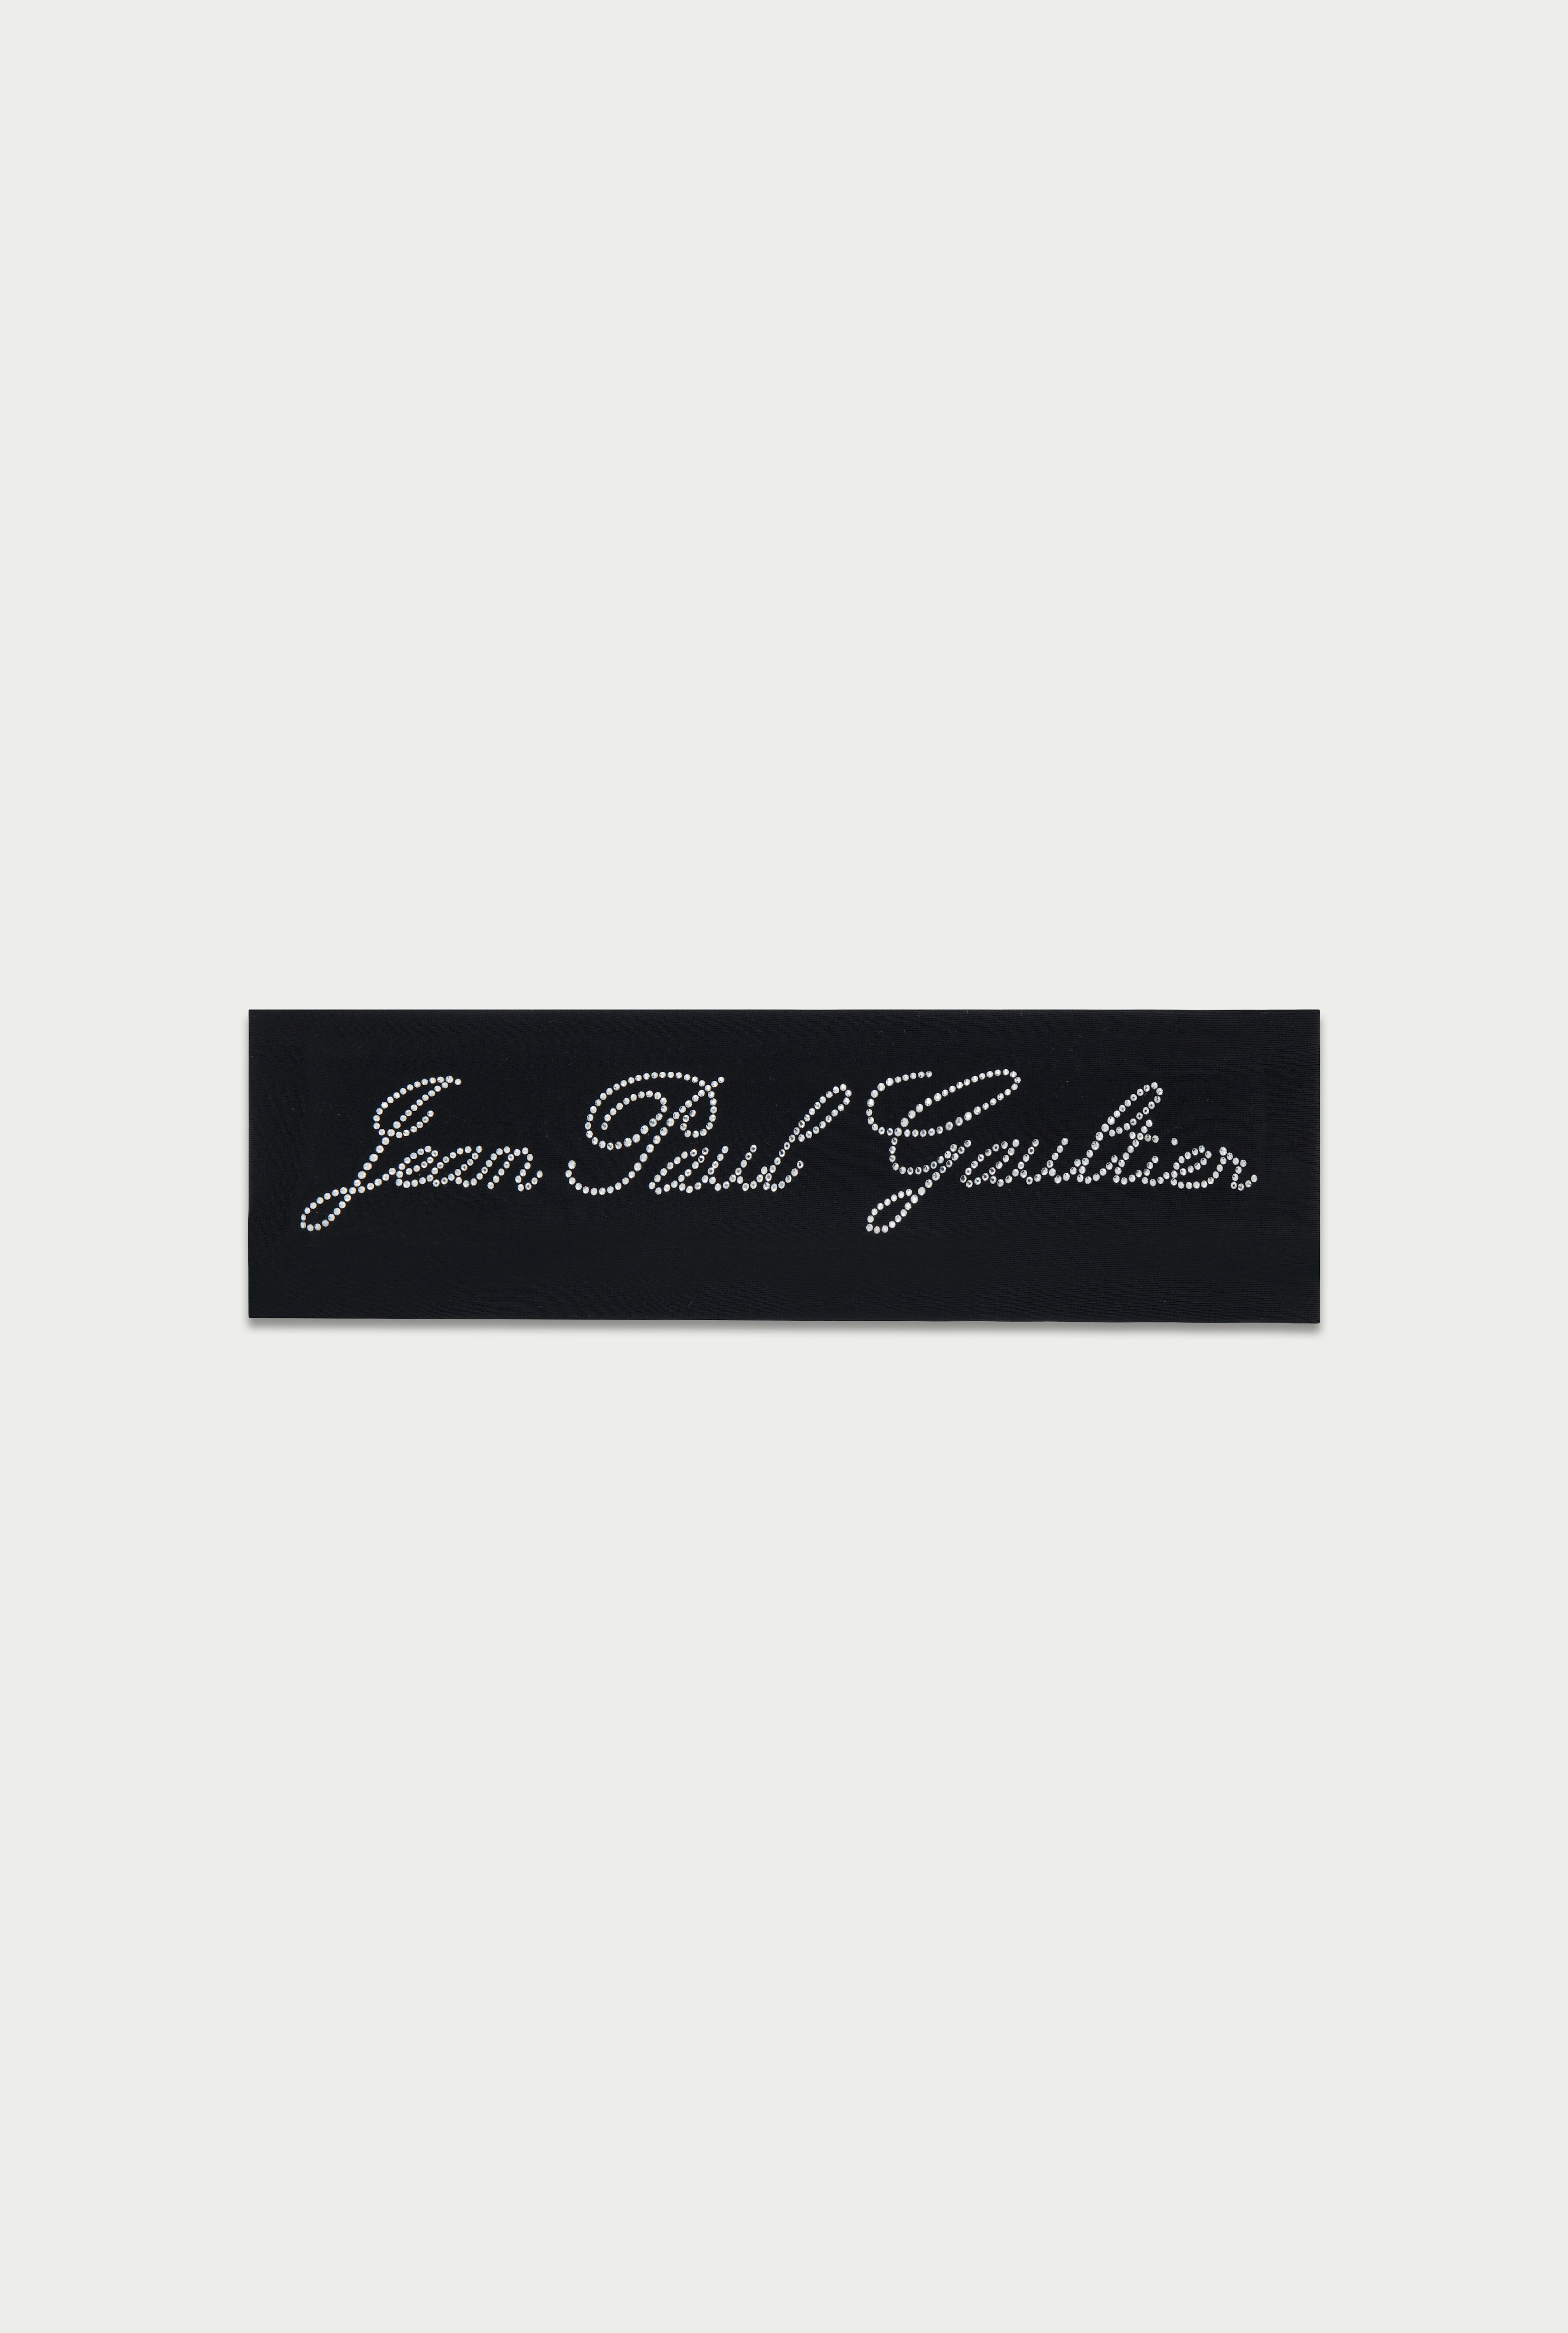 The Black Jean Paul Gaultier Headband hover